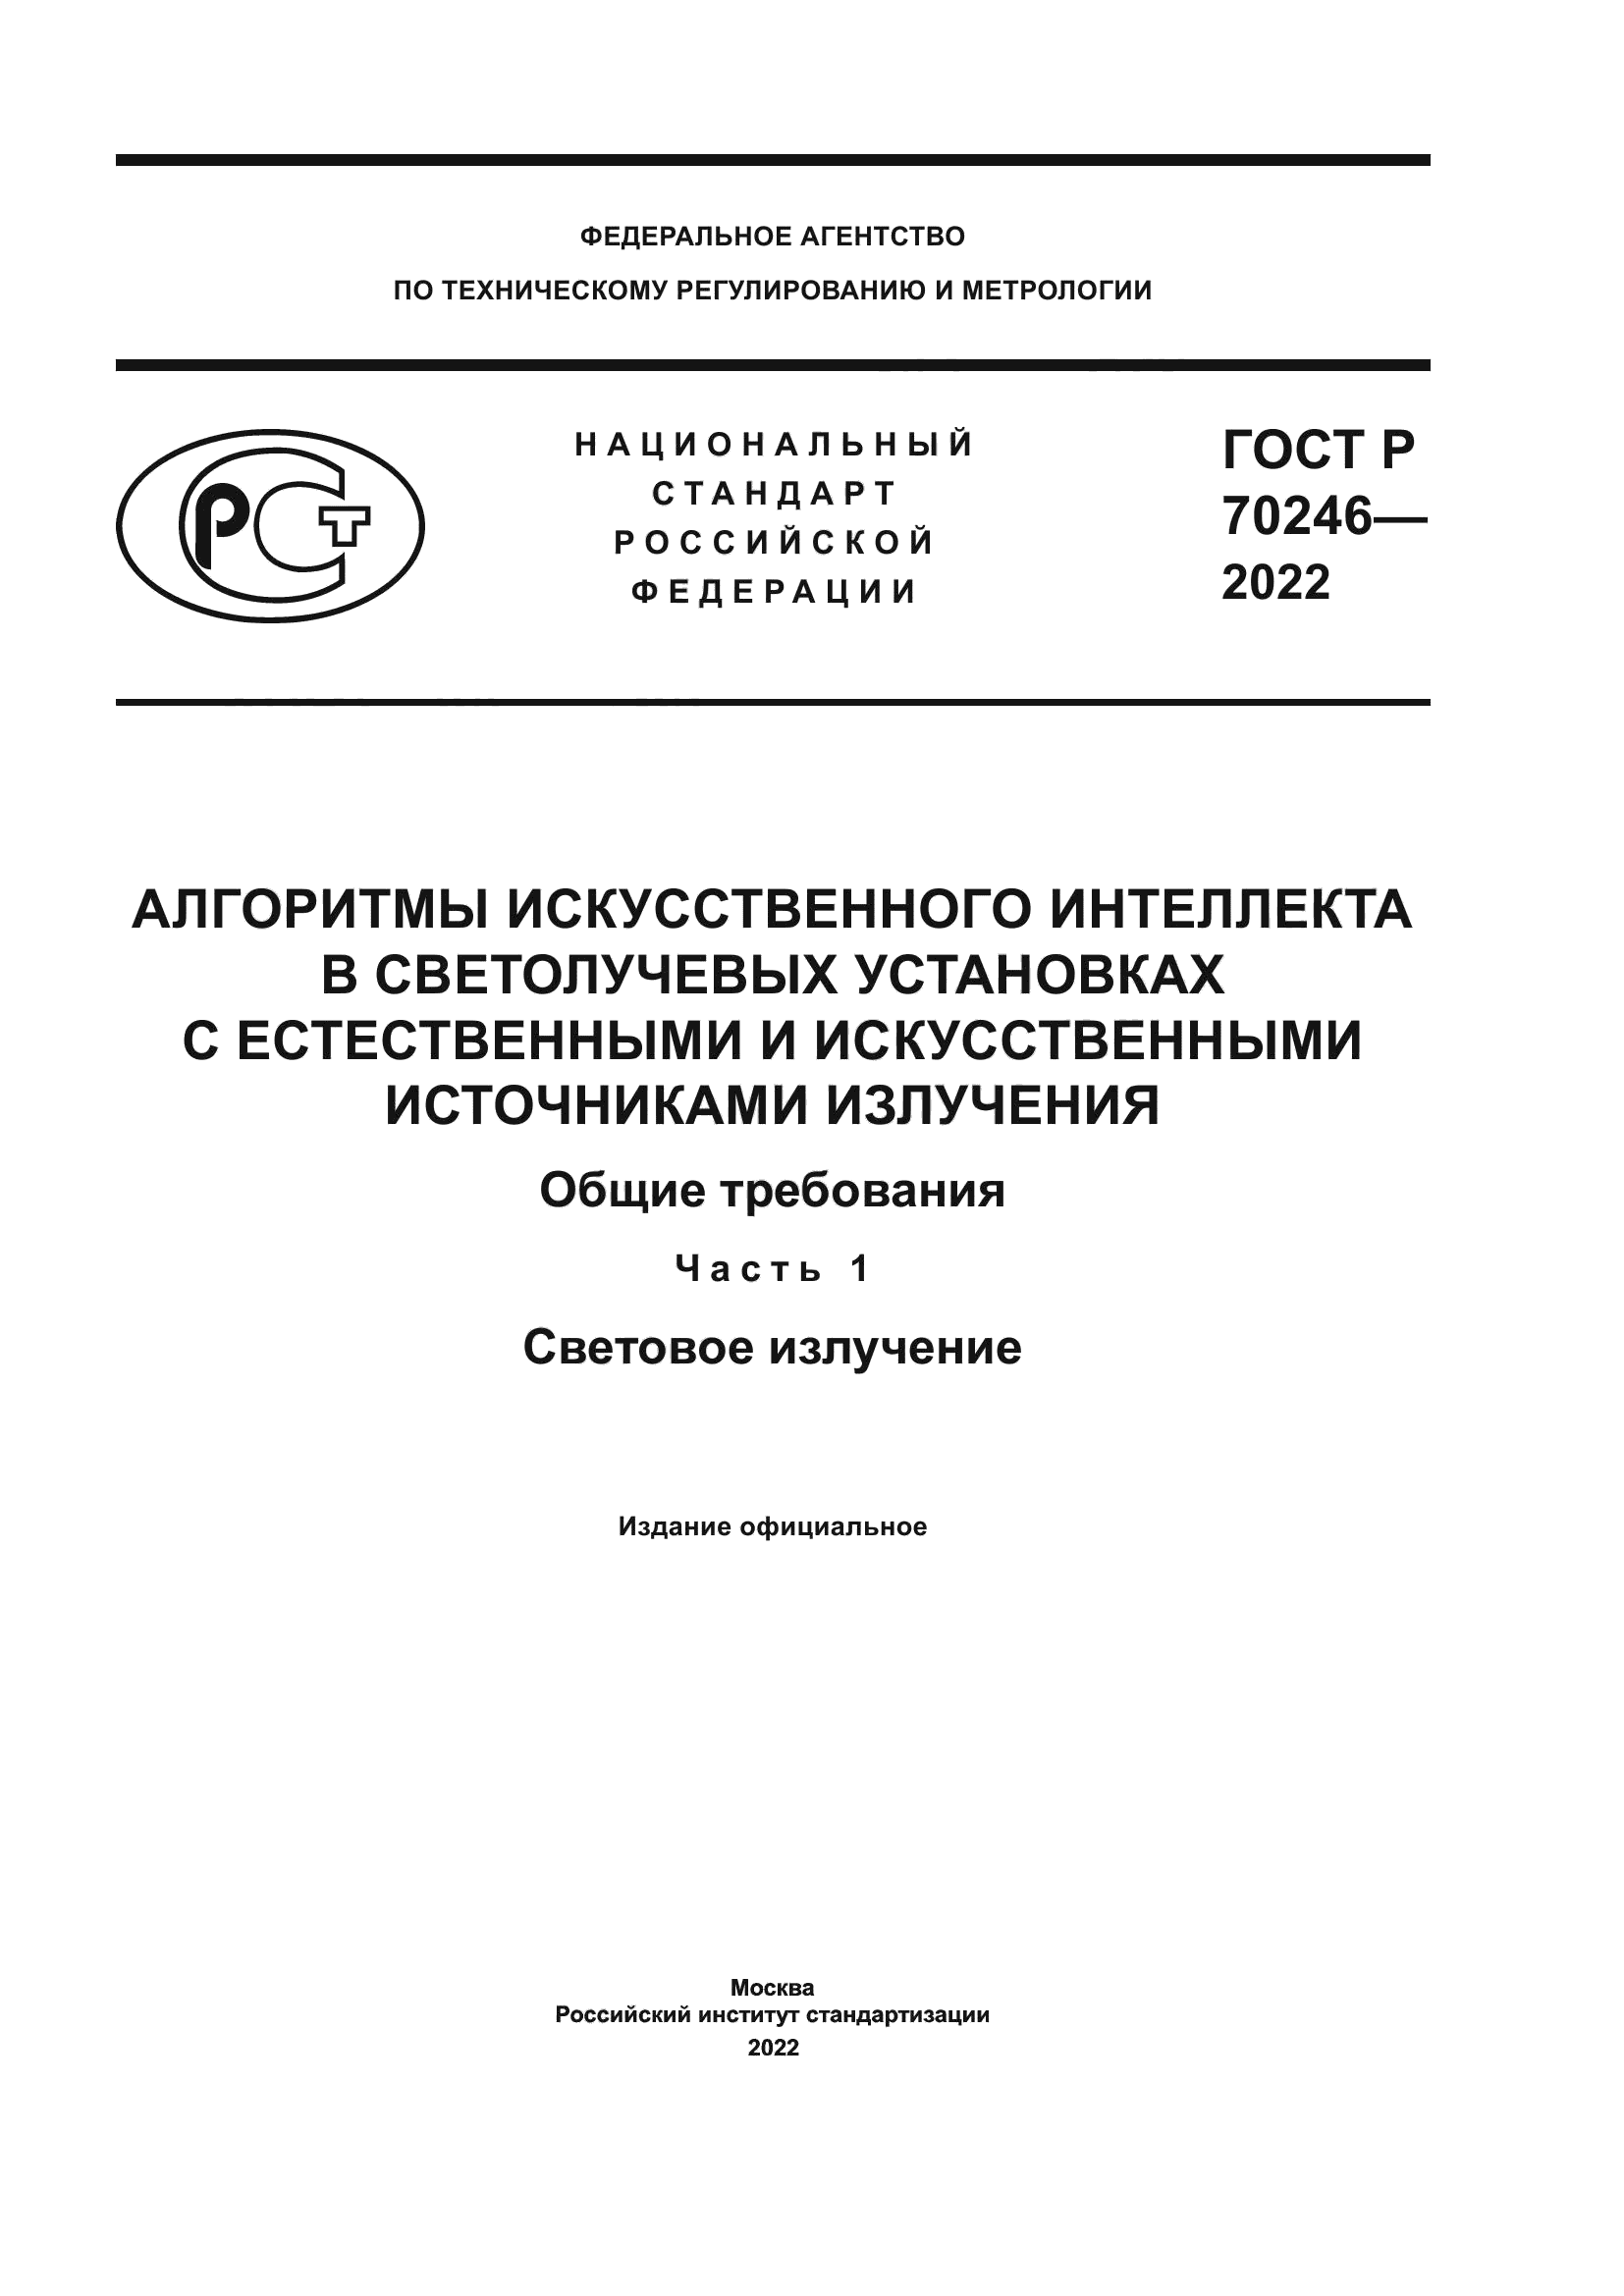 ГОСТ Р 70246-2022